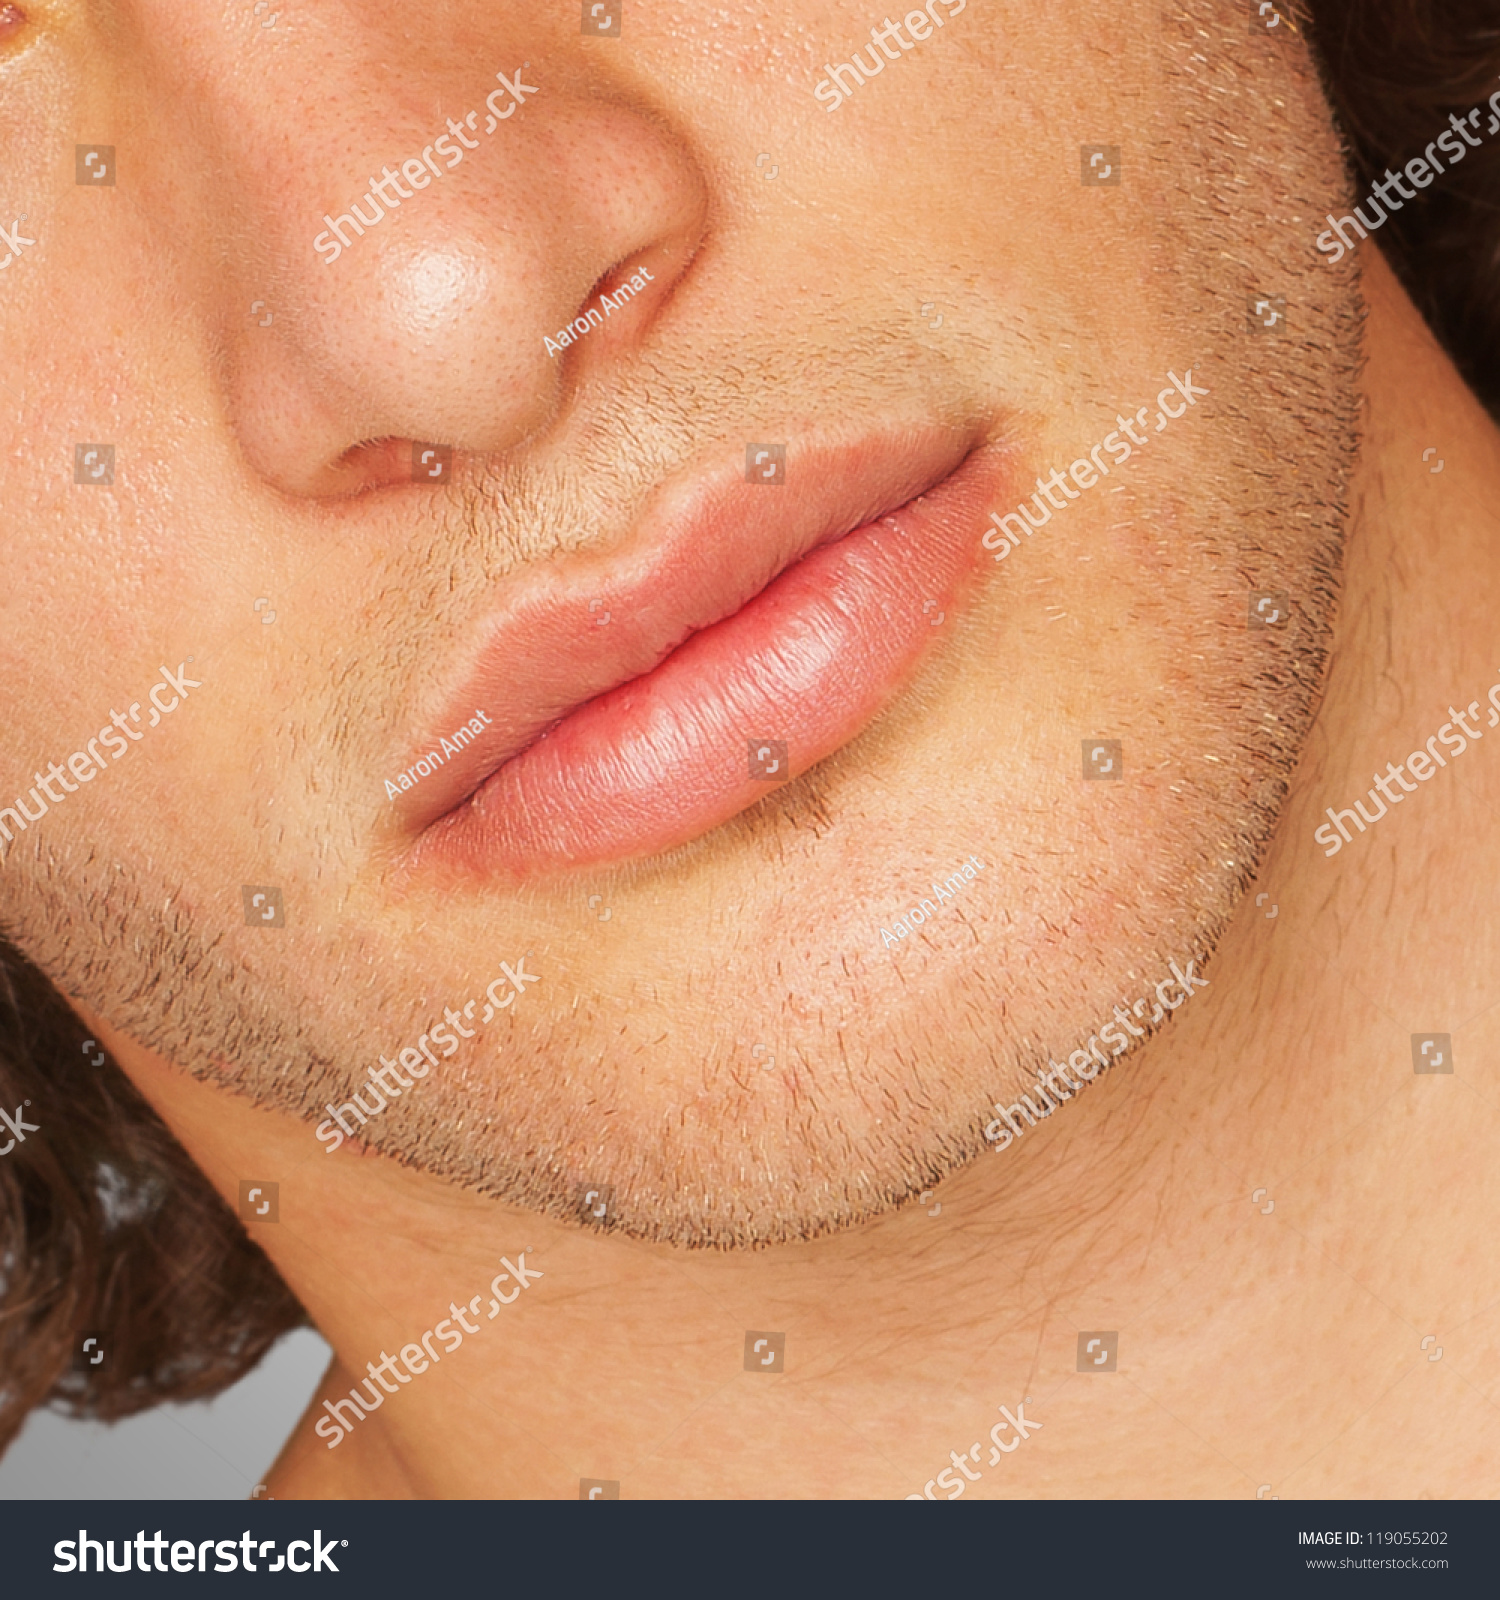 stock-photo-close-up-of-man-s-face-lips-119055202.jpg